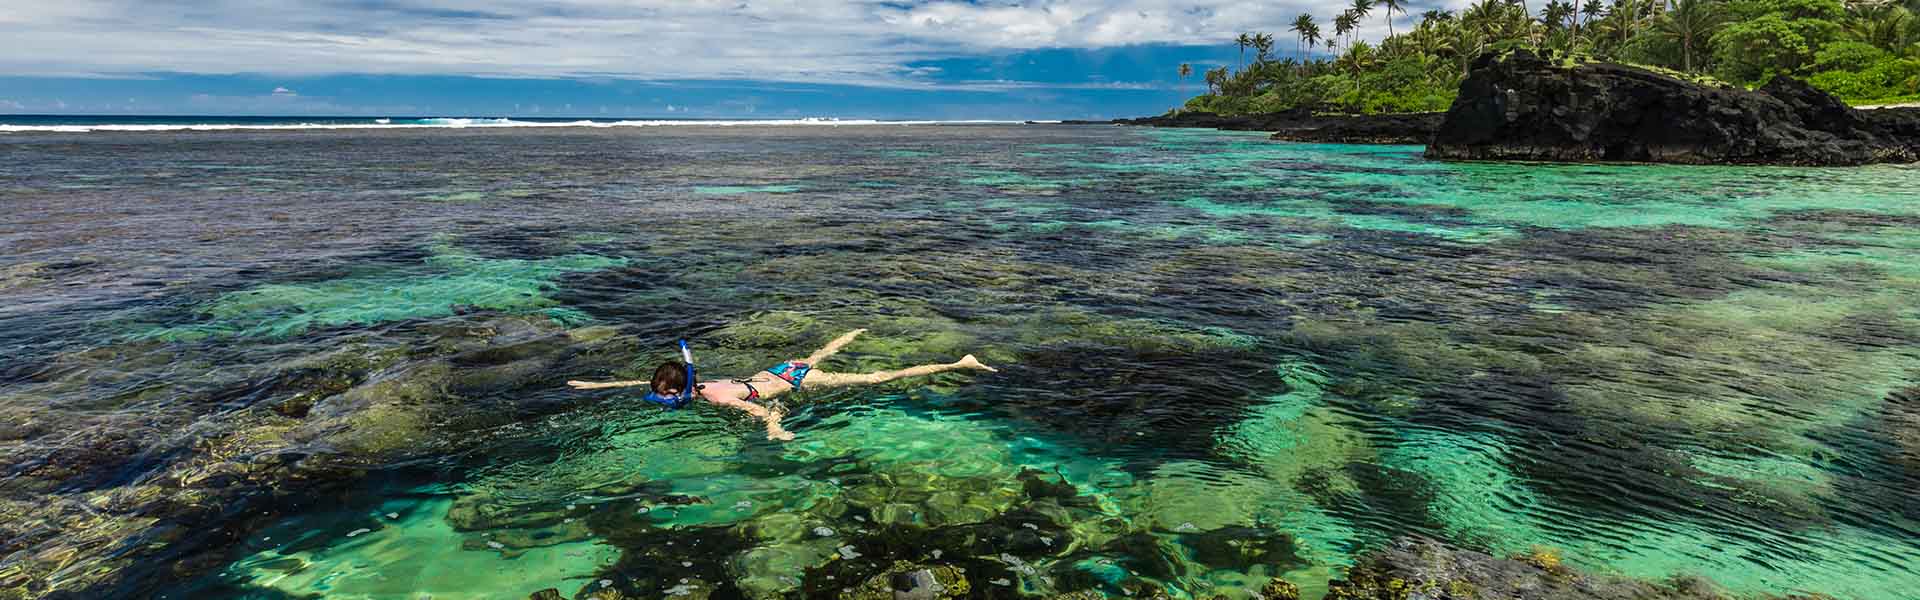 Five ways to experience Fiji